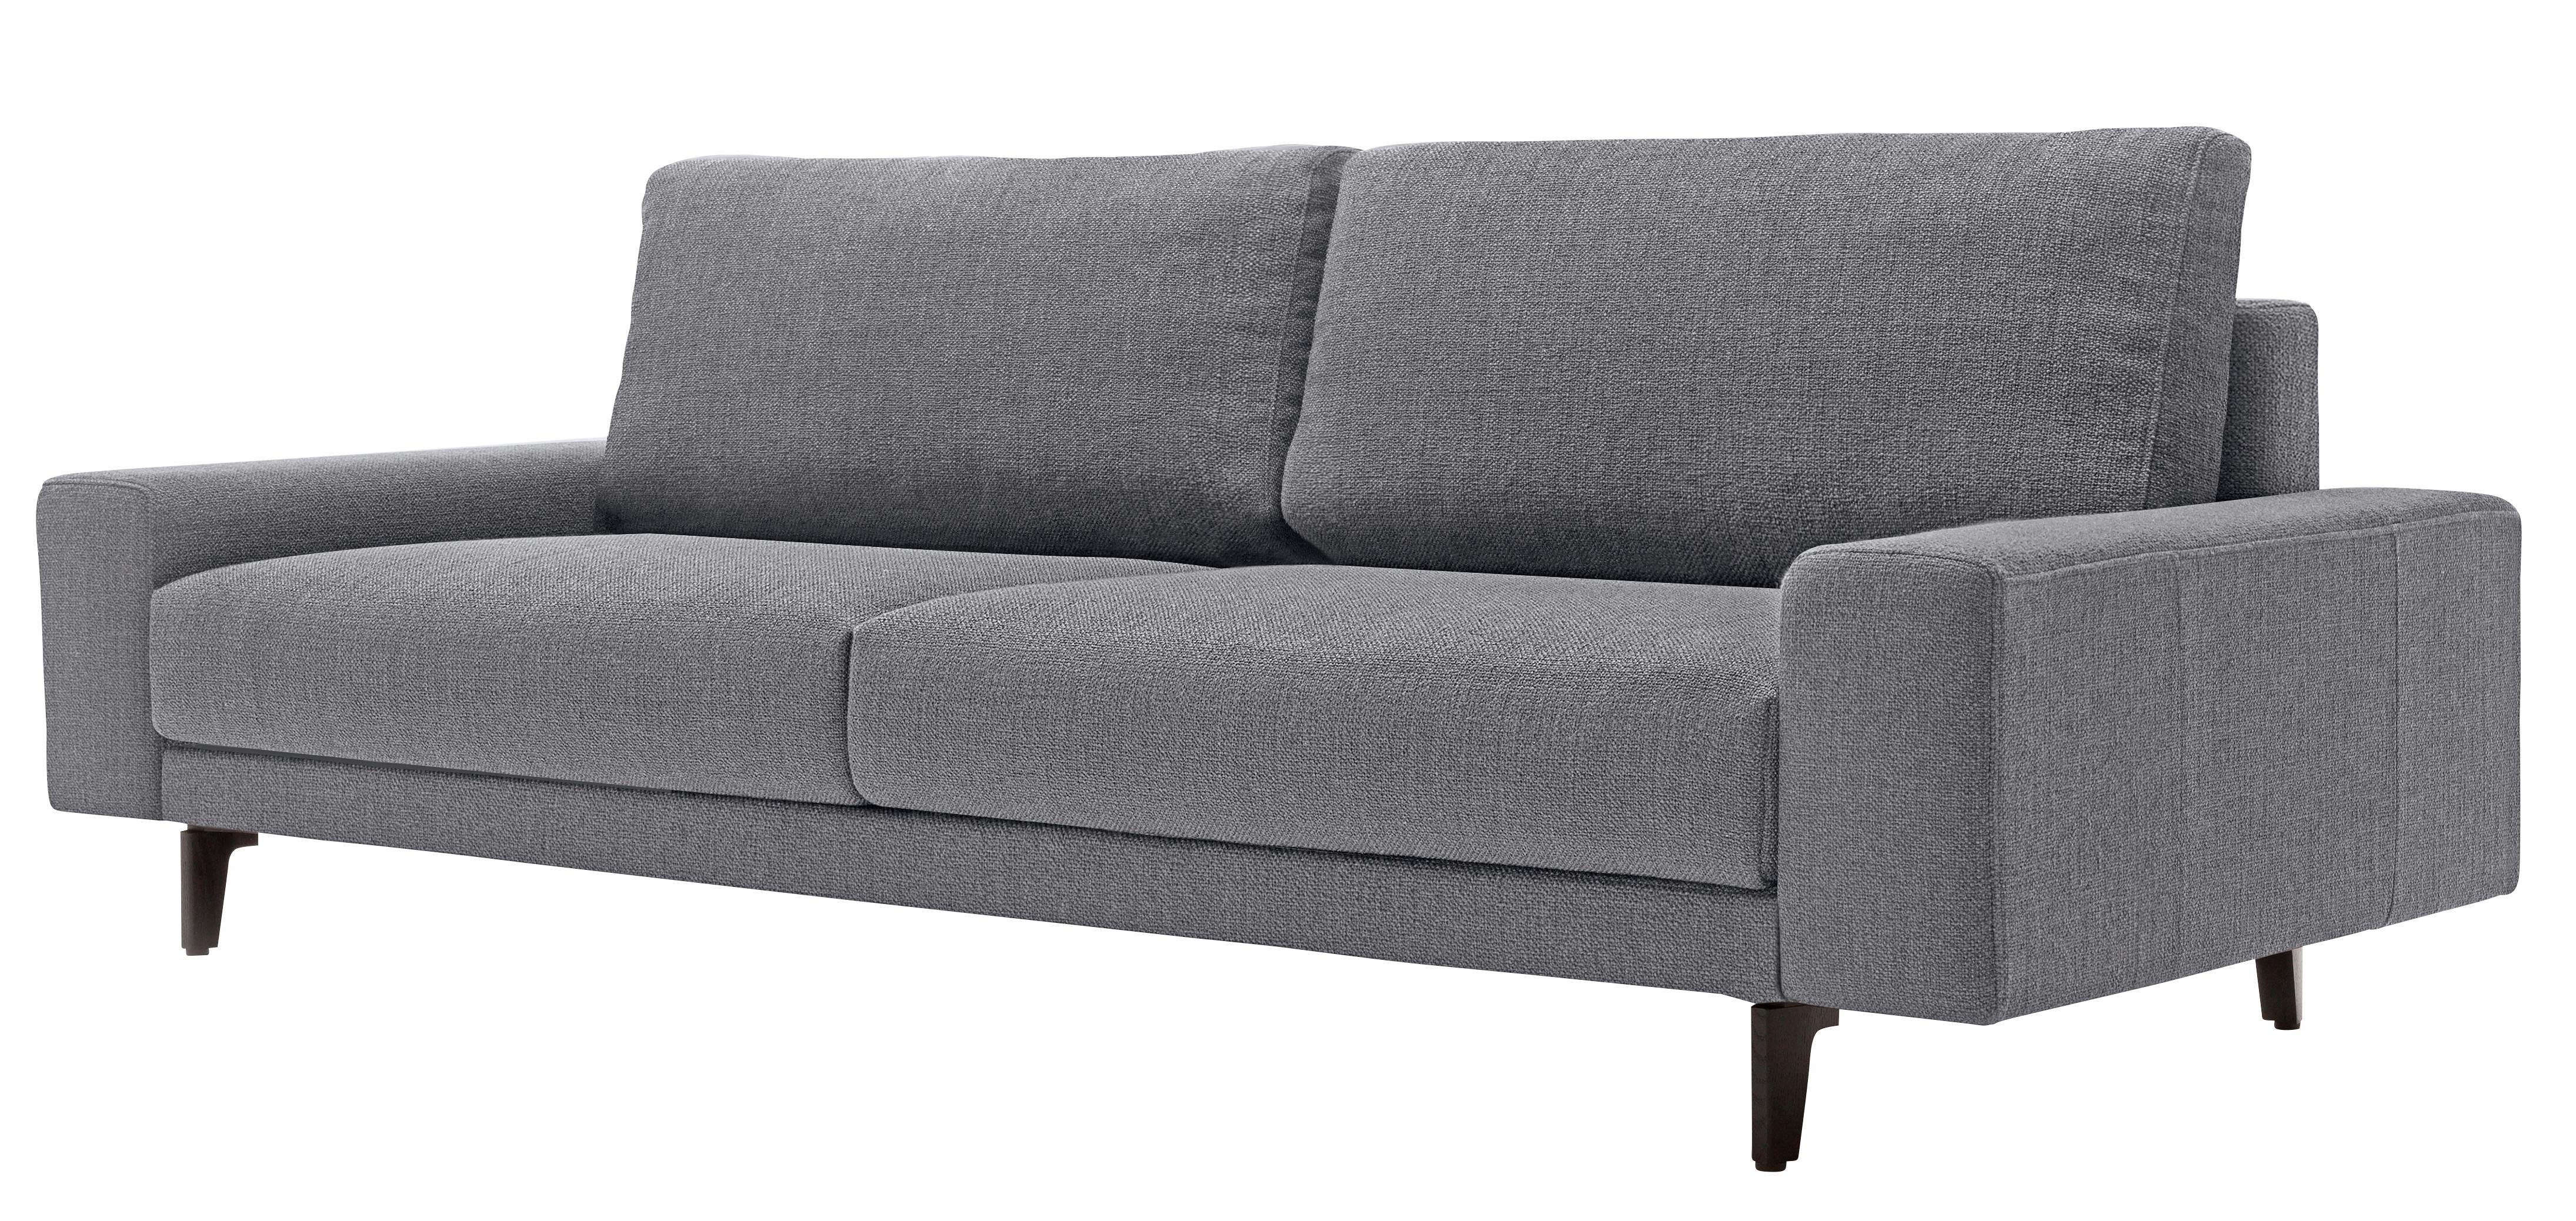 cm in hs.450, breit 220 umbragrau, hülsta niedrig, Breite sofa Armlehne 3-Sitzer Alugussfüße